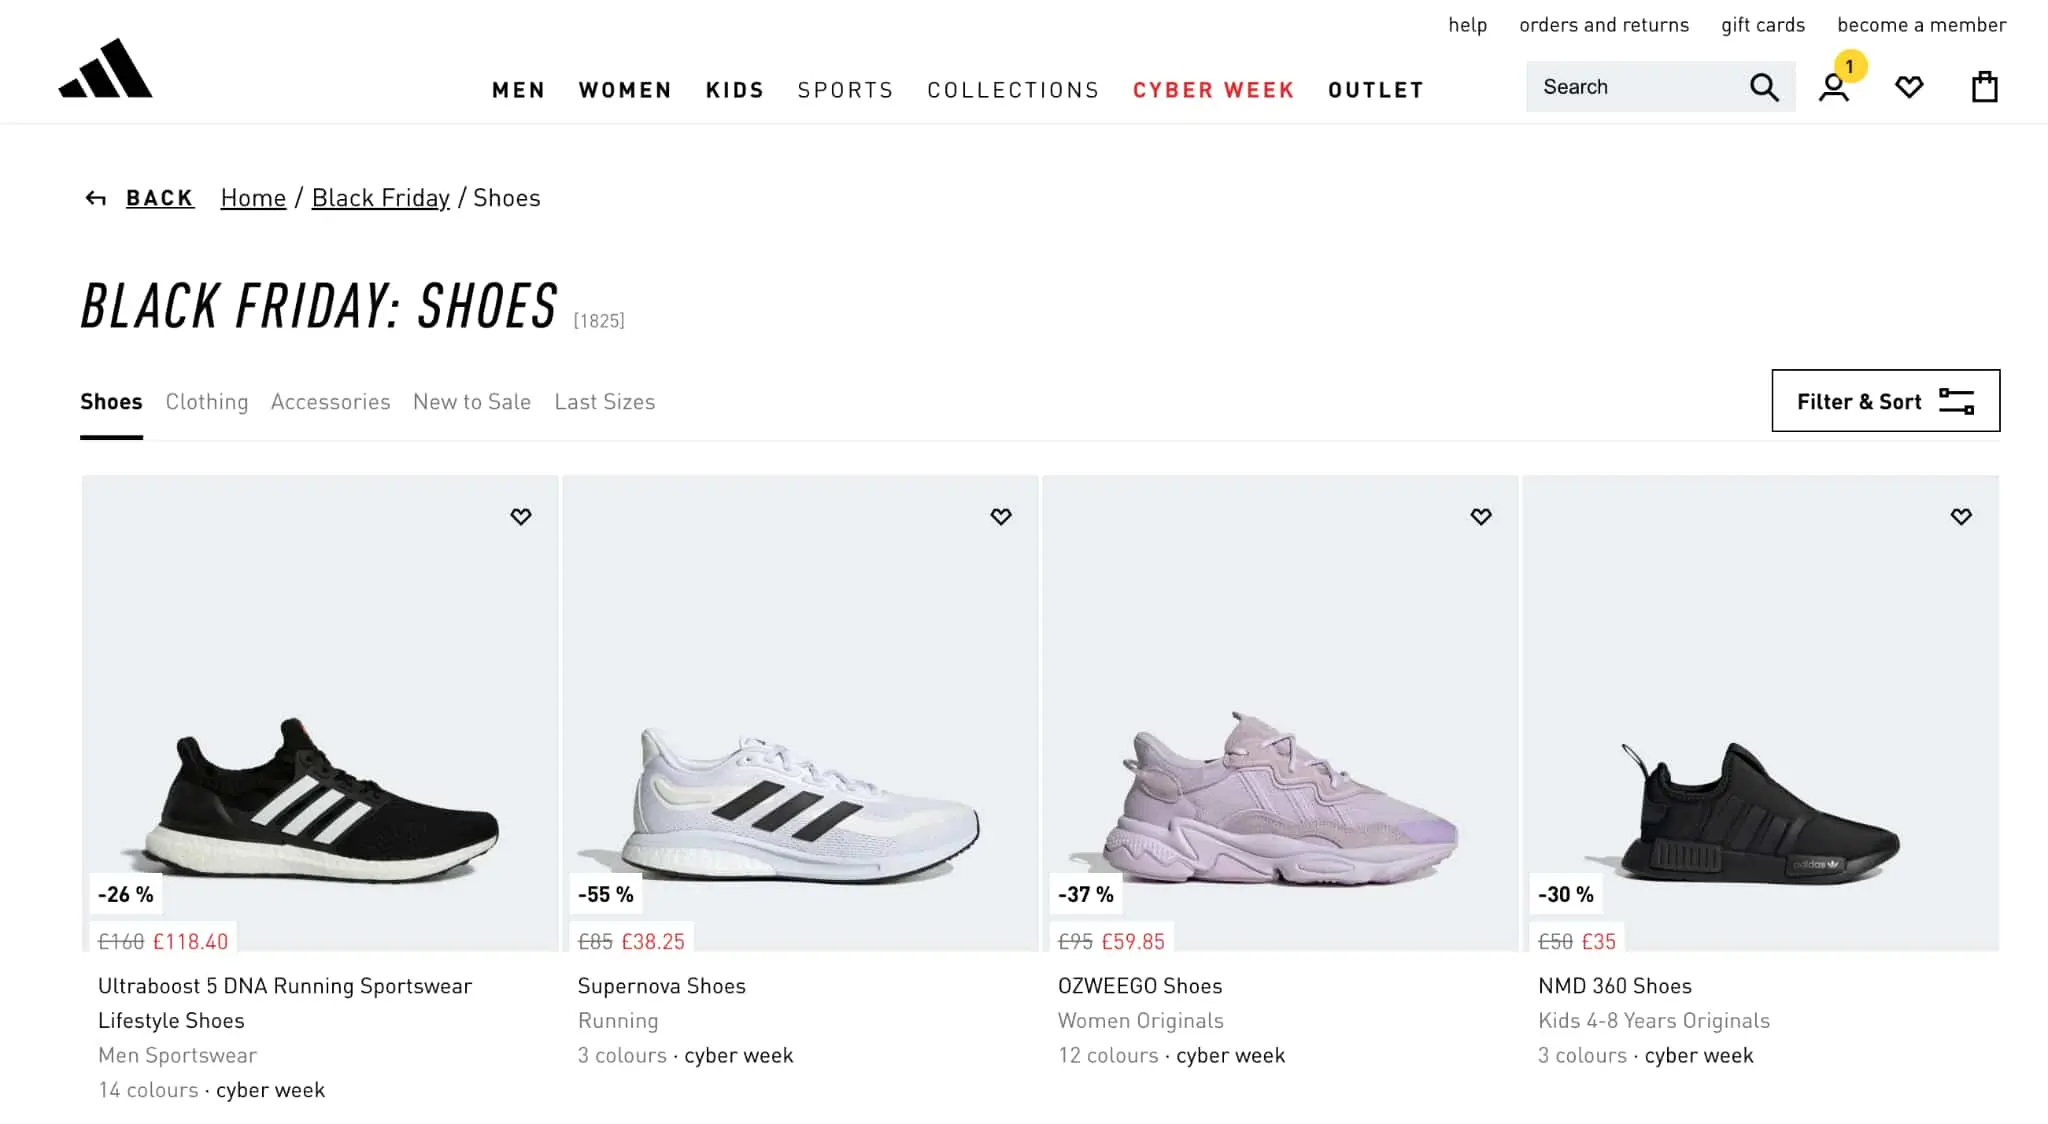 adidas website as an example of UI breadcrumbs